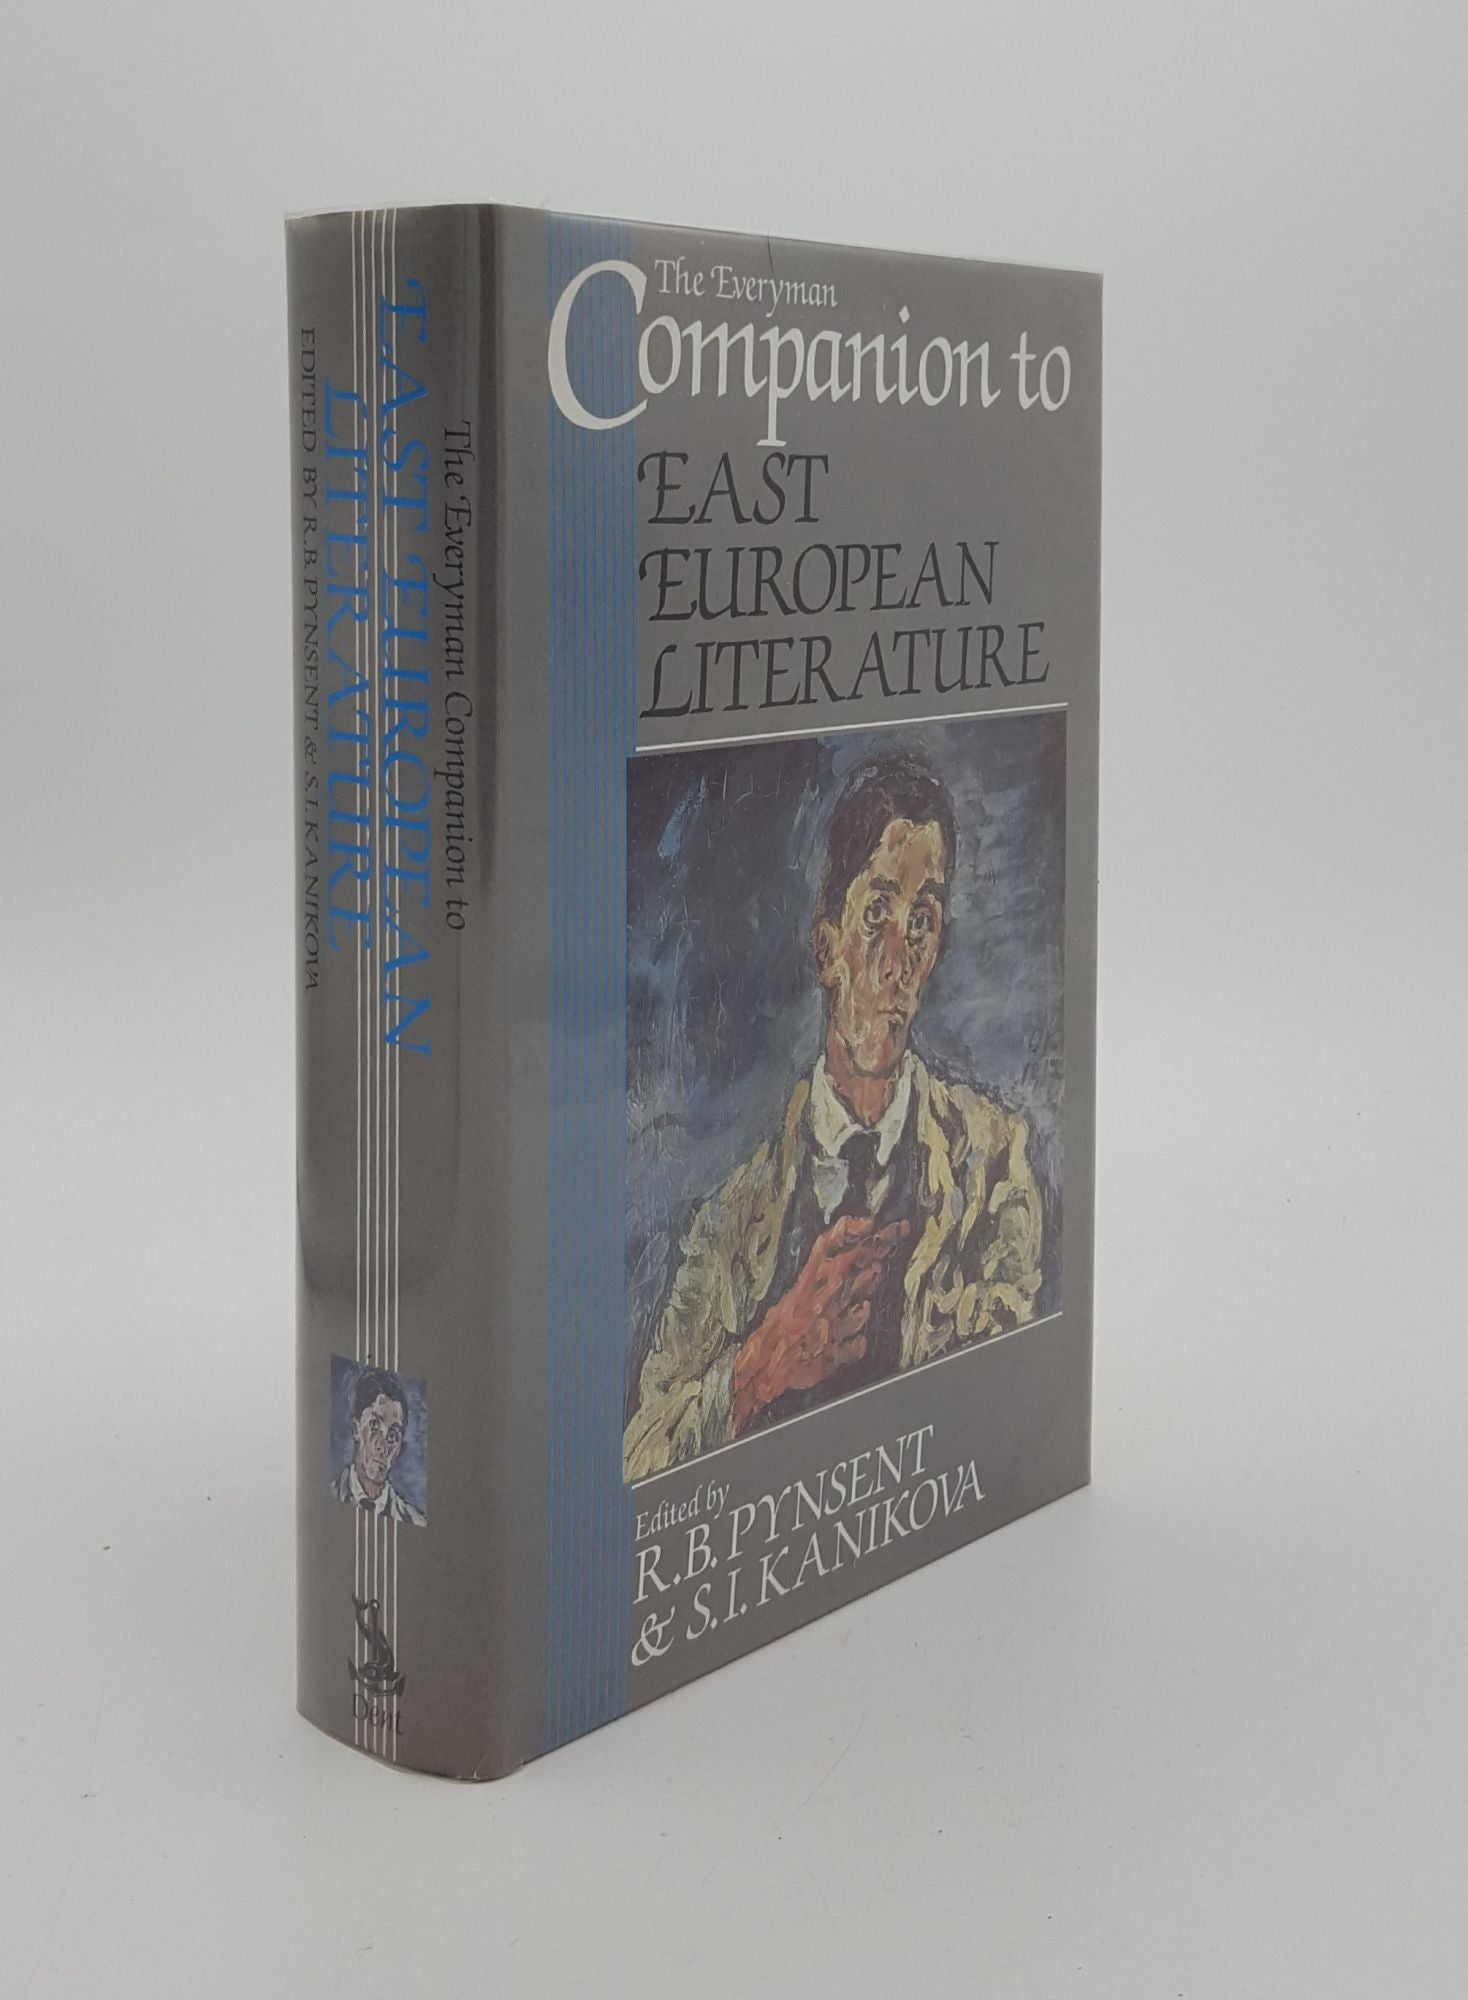 PYNSENT R.B, KANIKOVA S.I. - The Everyman Companion to East European Literature